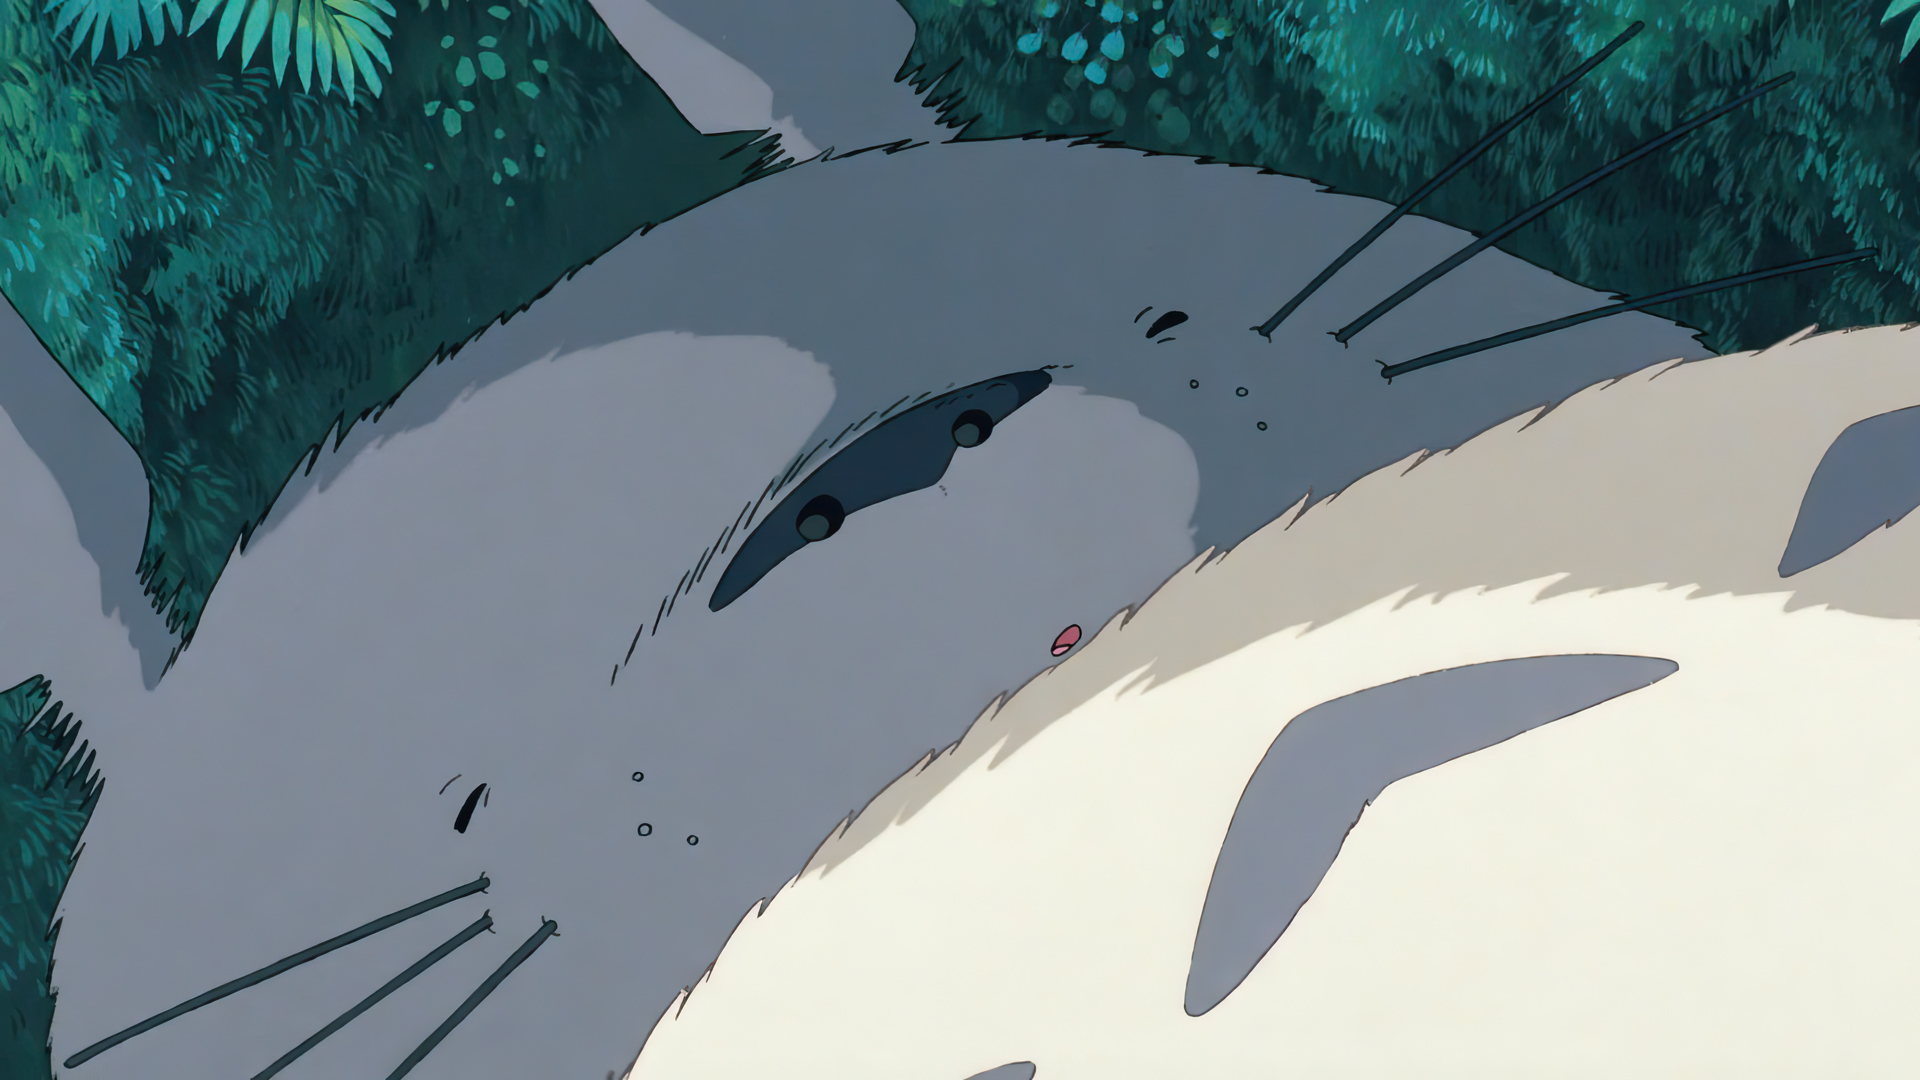 Anime 1920x1080 My Neighbor Totoro animated movies film stills anime animation Studio Ghibli Hayao Miyazaki Totoro creature closed eyes